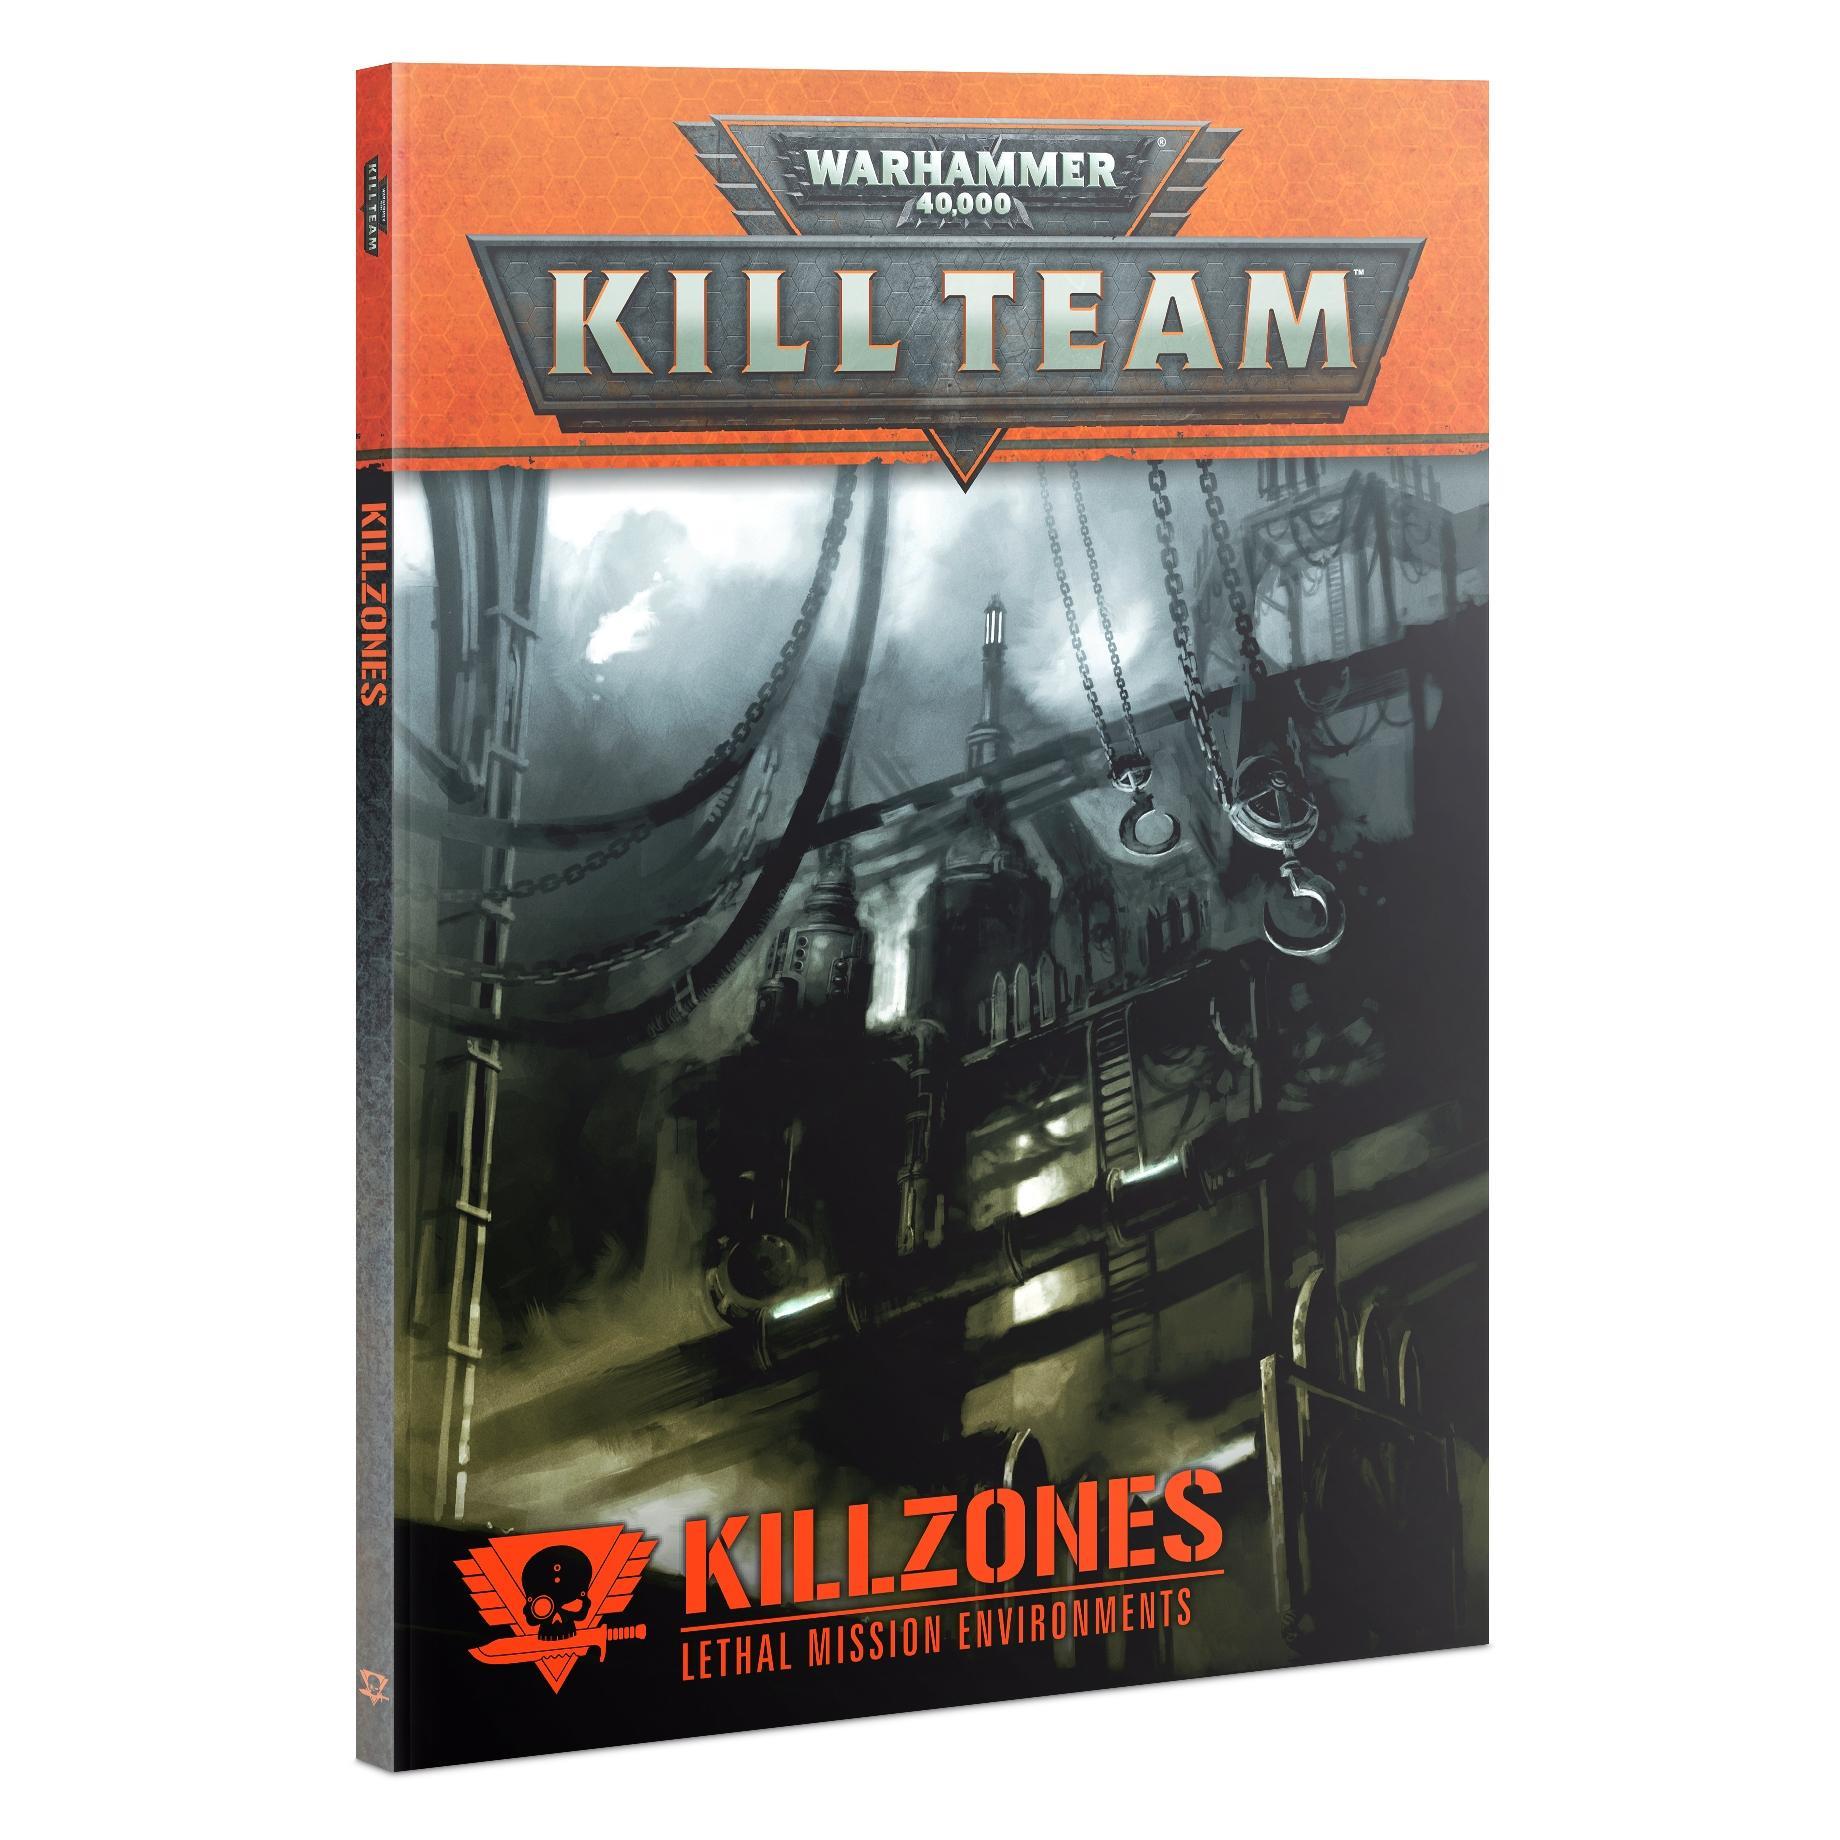 Warhammer 40K Kill Team Killzones Lethal Mission Environments 103-73